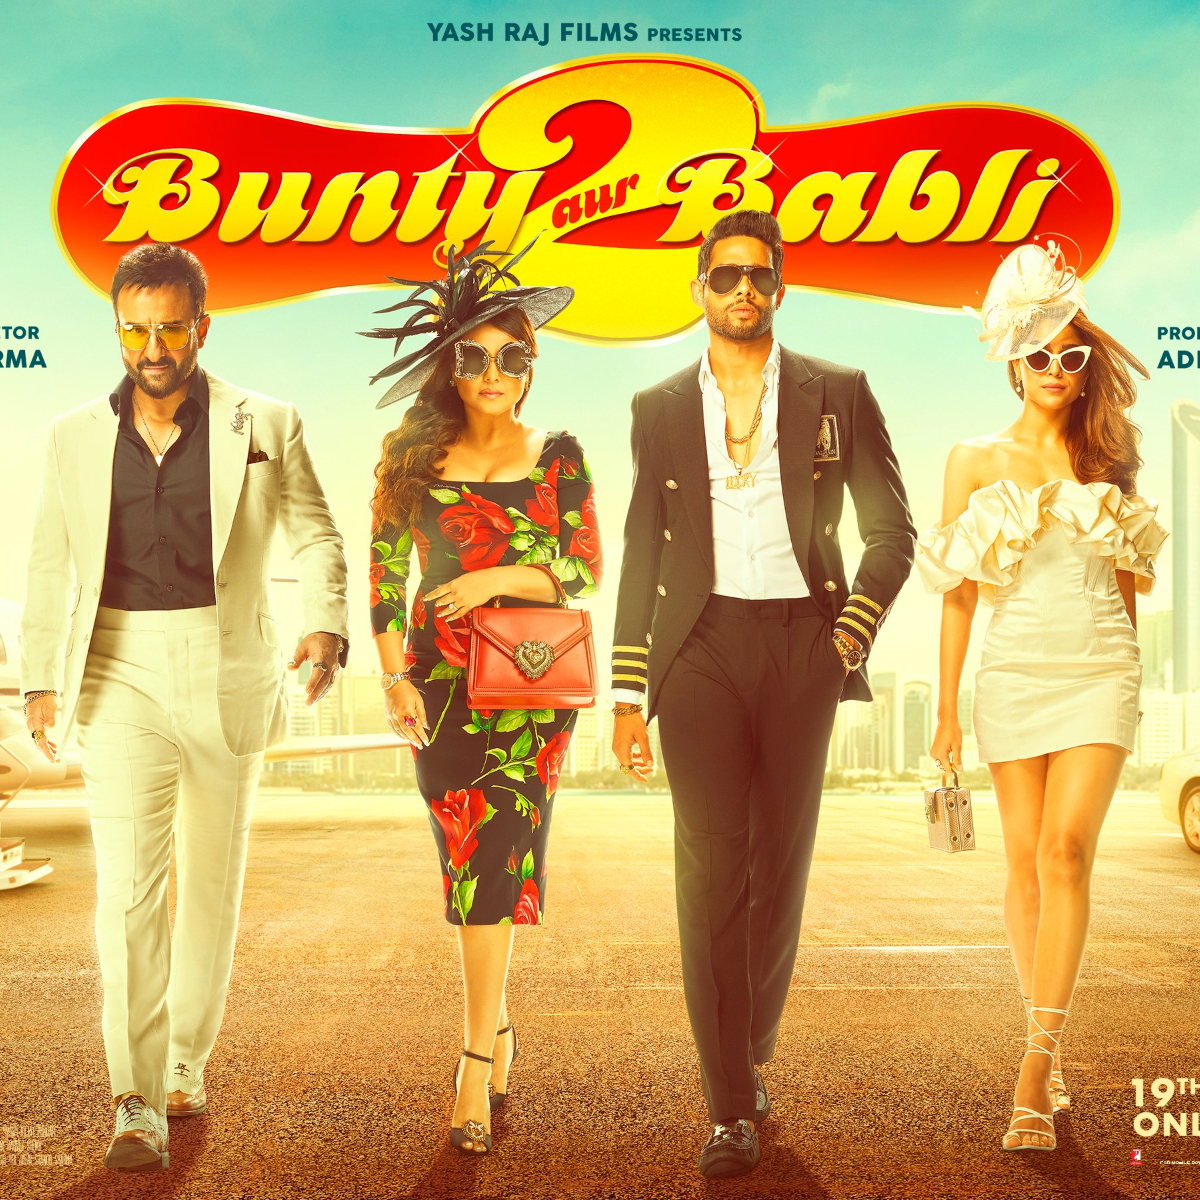 Bunty Aur Babli 2 Review: Saif Ali Khan, Rani Mukerji's film CONS you off a weak script with spirited ensemble